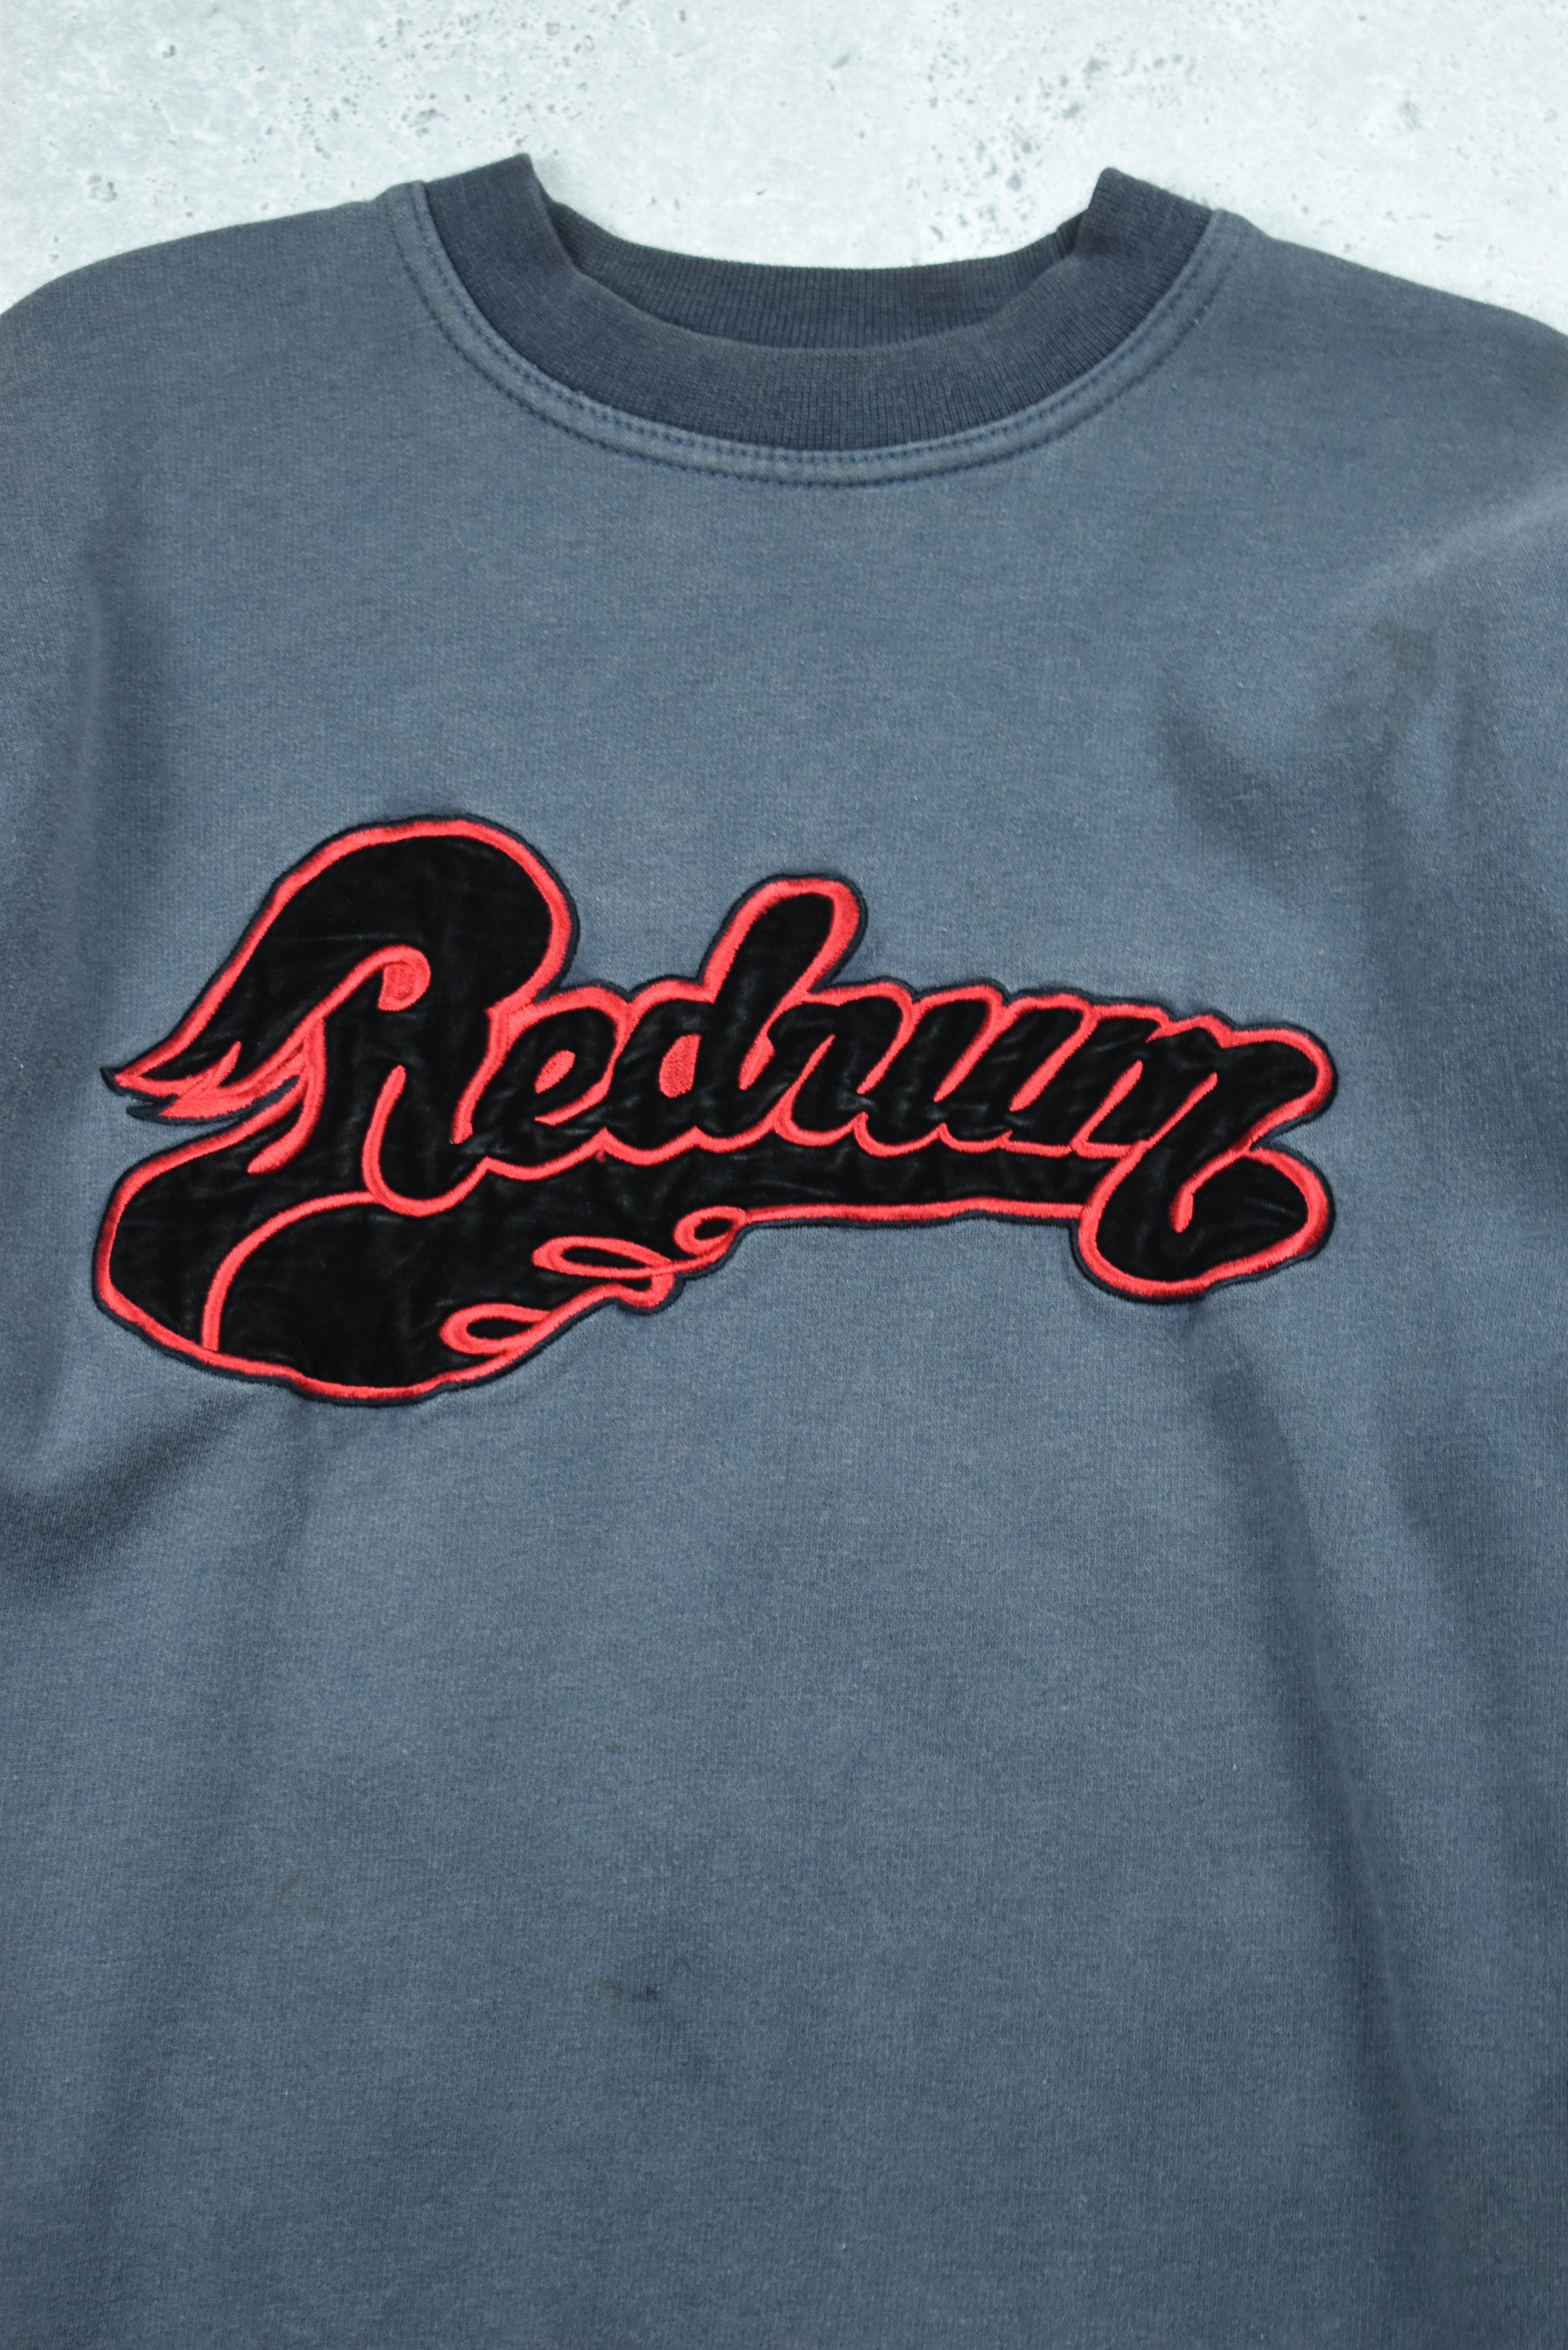 Vintage Redrum Embroidery Grey Sweatshirt Medium